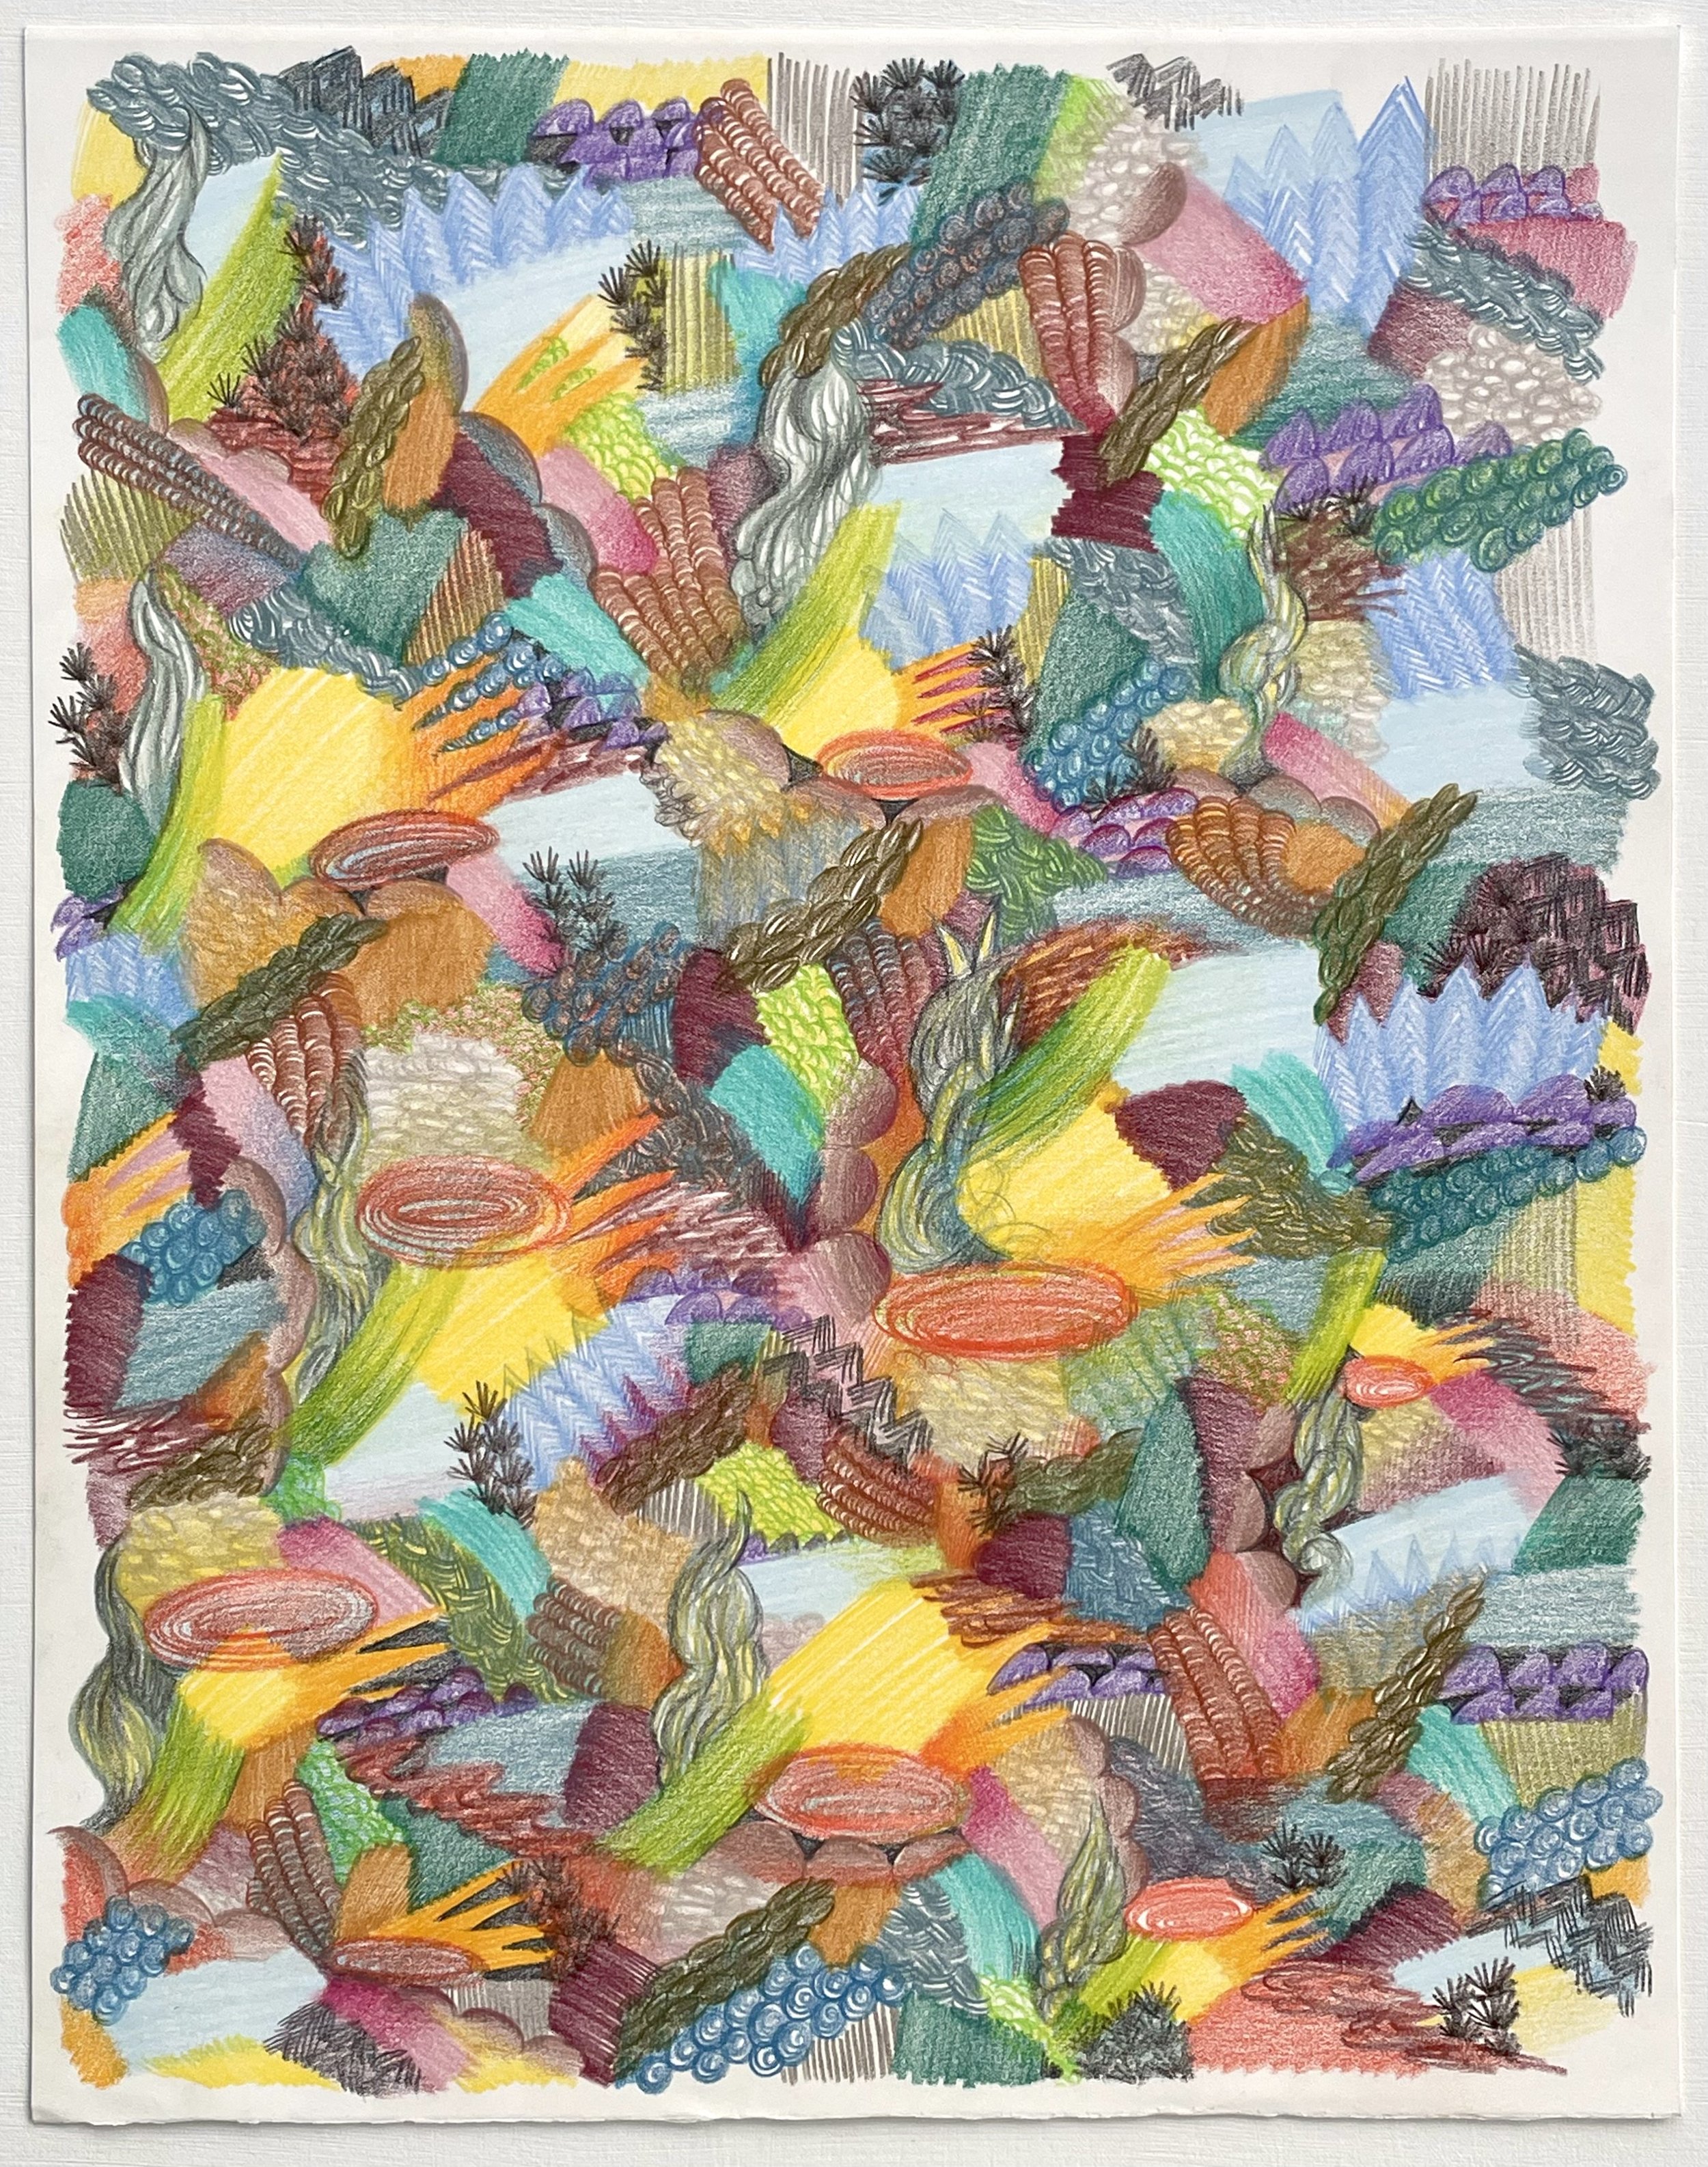  Color pencil on paper, 20 x 16 